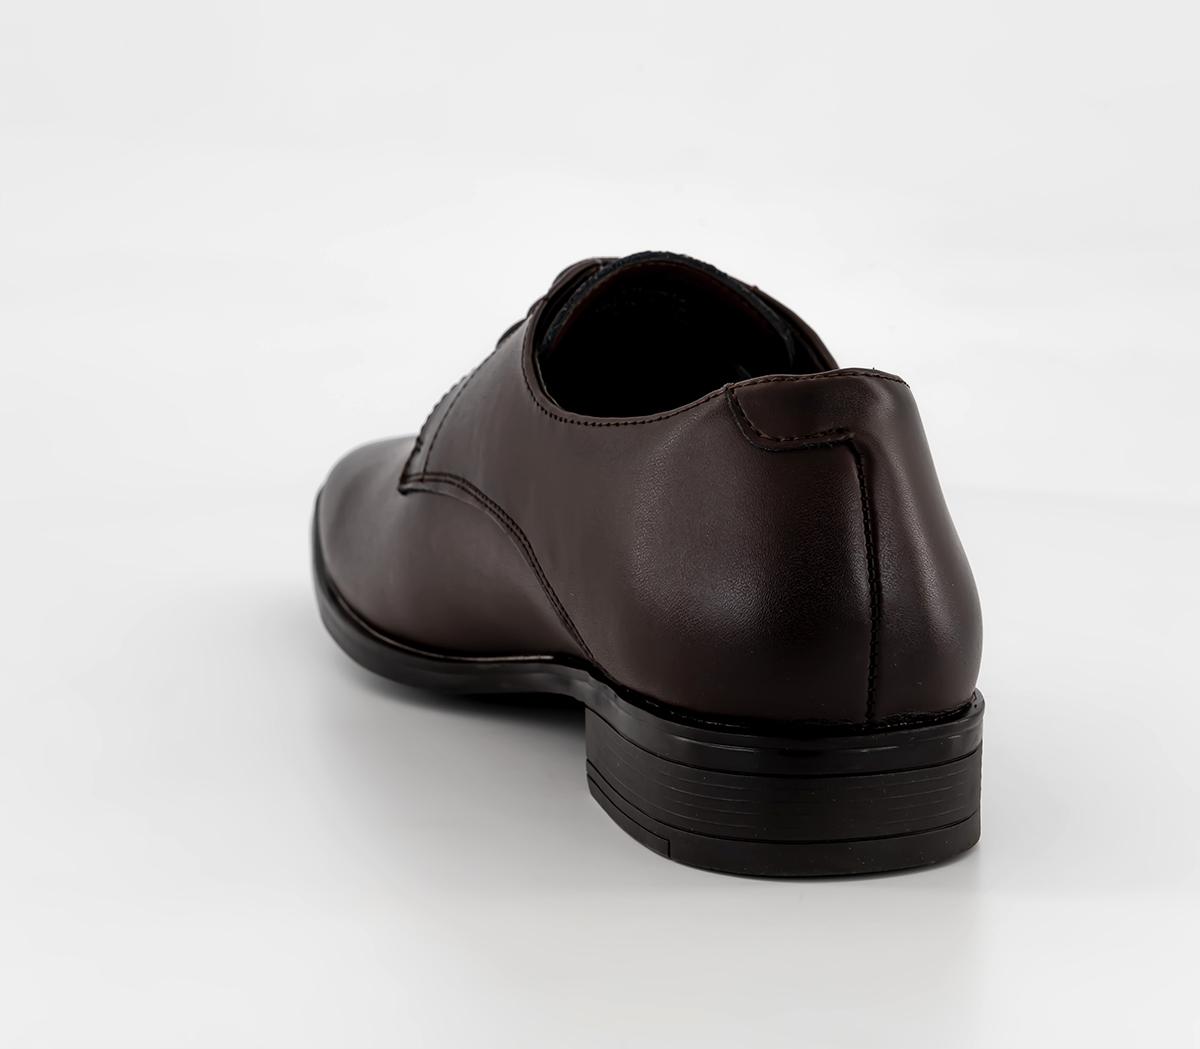 OFFICE Micro 2 Plain Derby Shoes Brown Leather - Men’s Smart Shoes